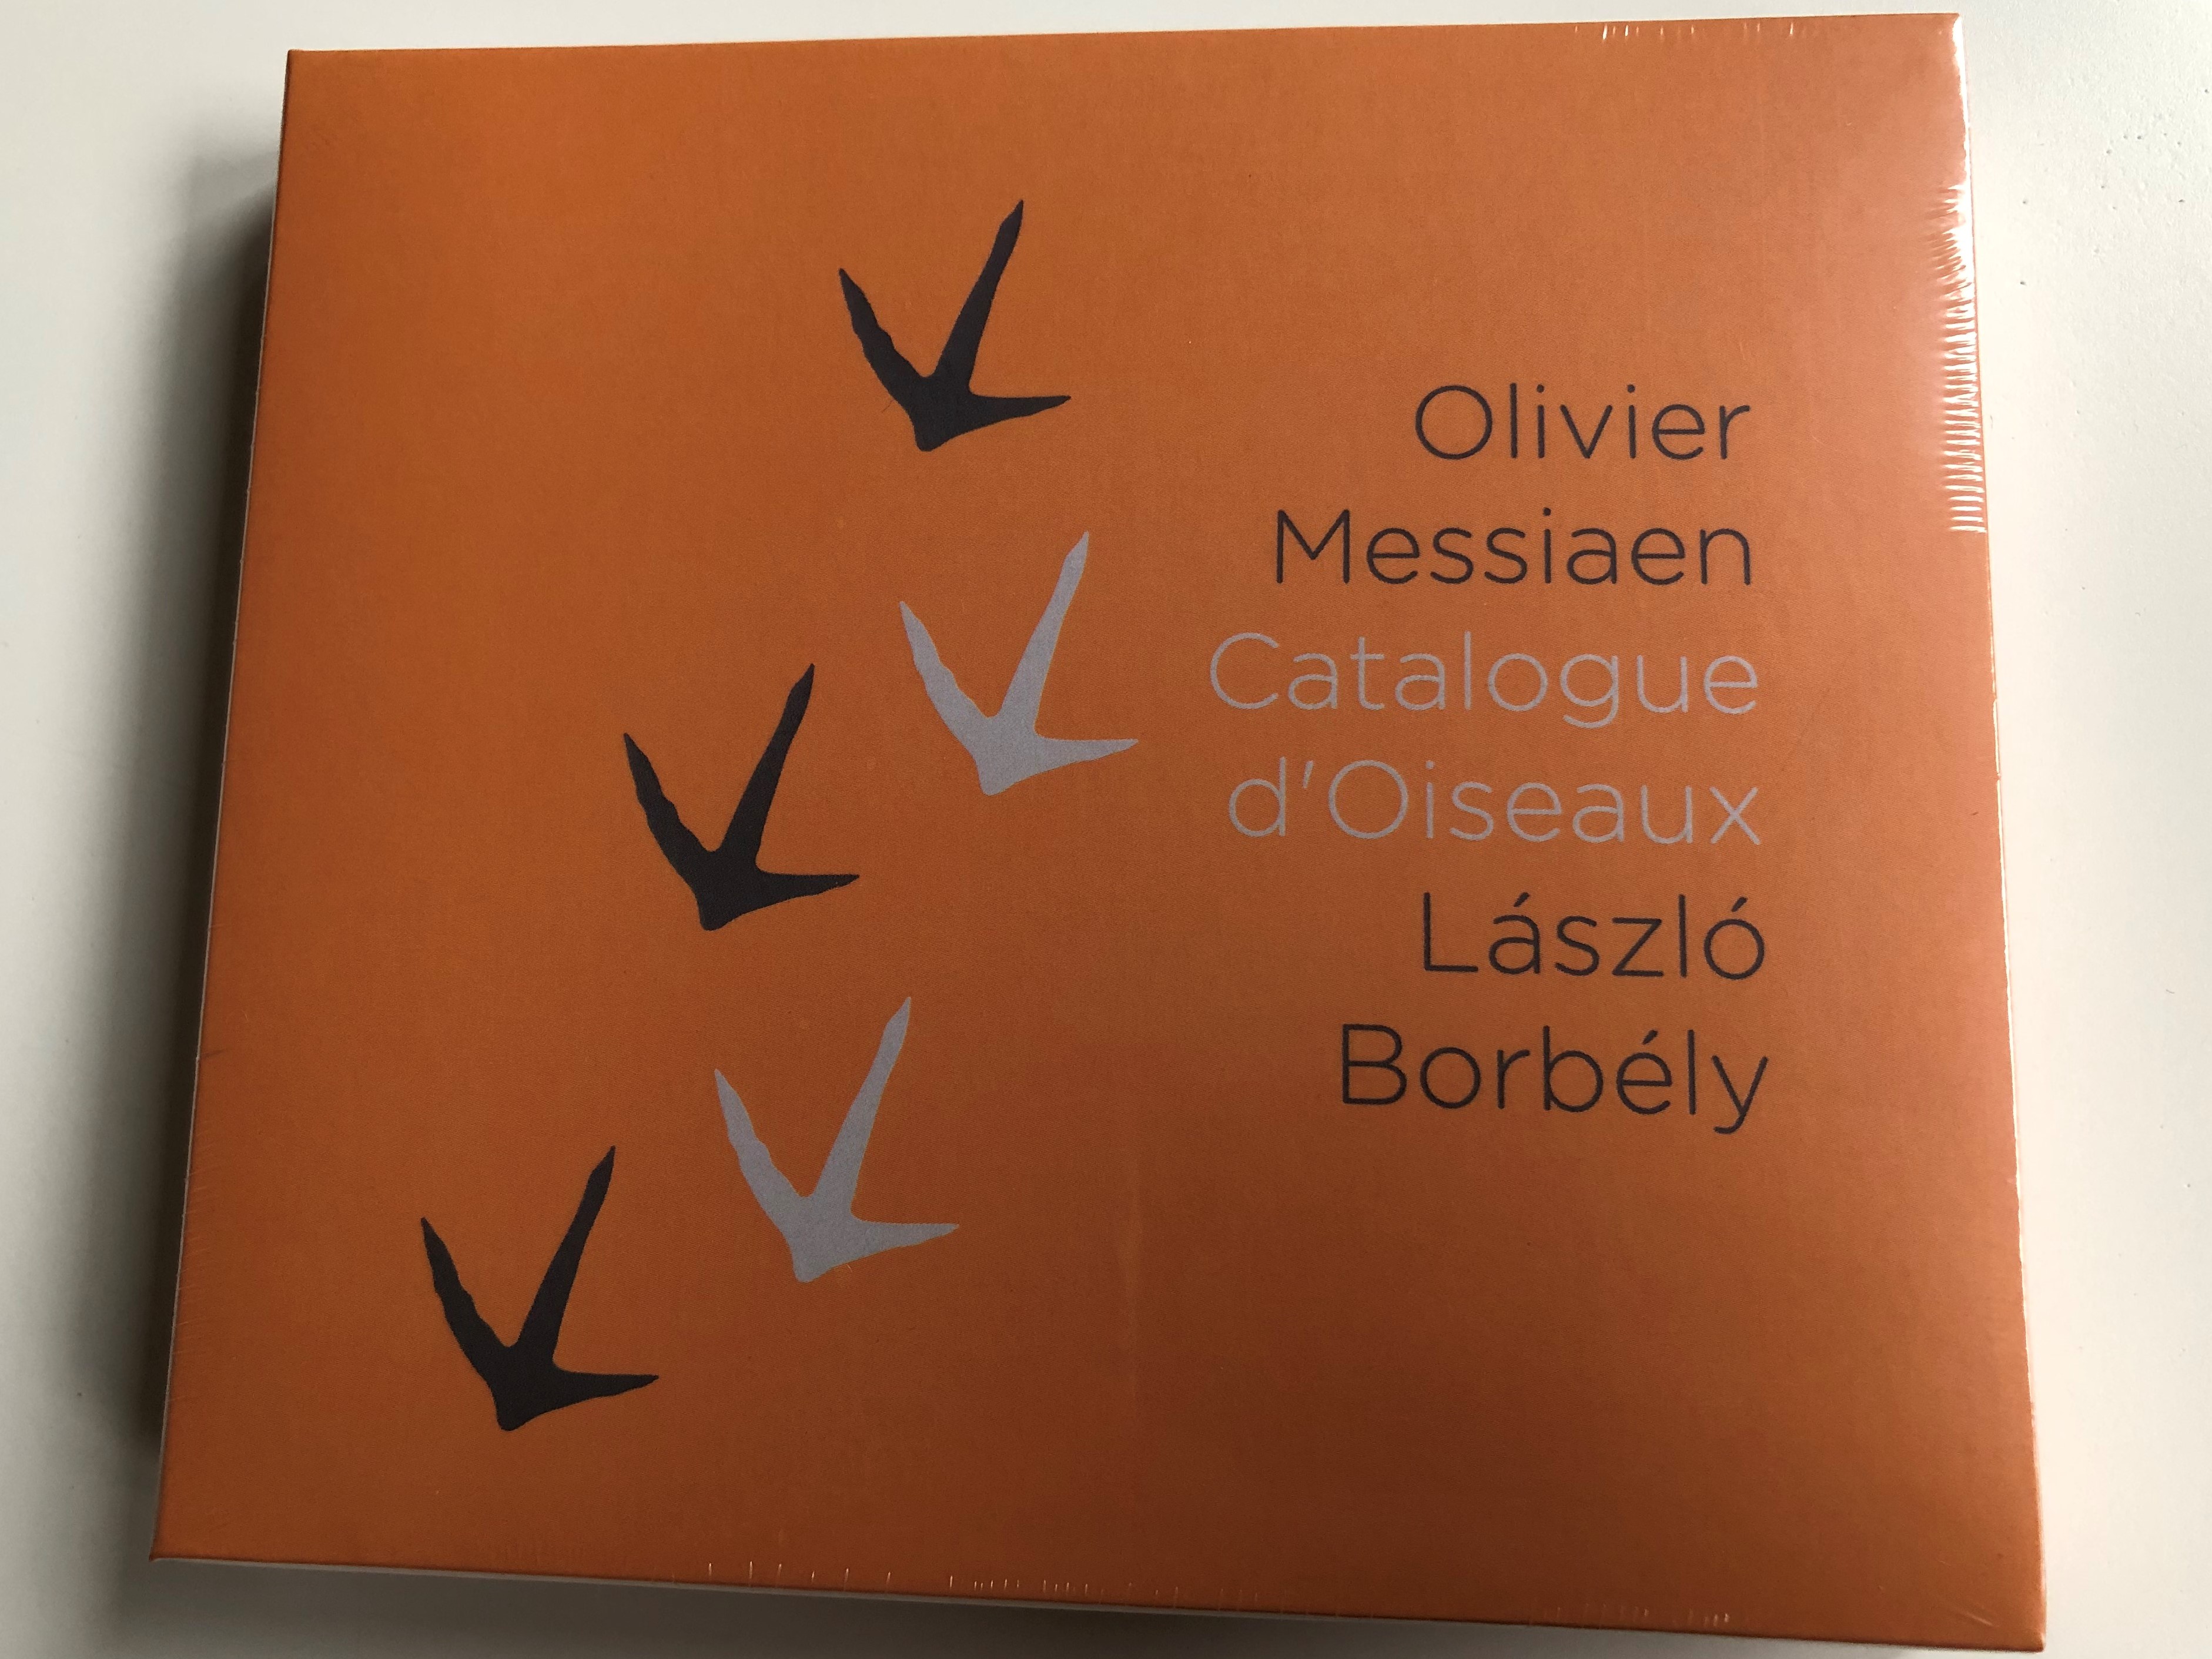 oliver-messiaen-catalogue-d-oiseaux-laszlo-borbely-hunnia-records-film-production-3x-audio-cd-2020-hrcd2008-1-.jpg